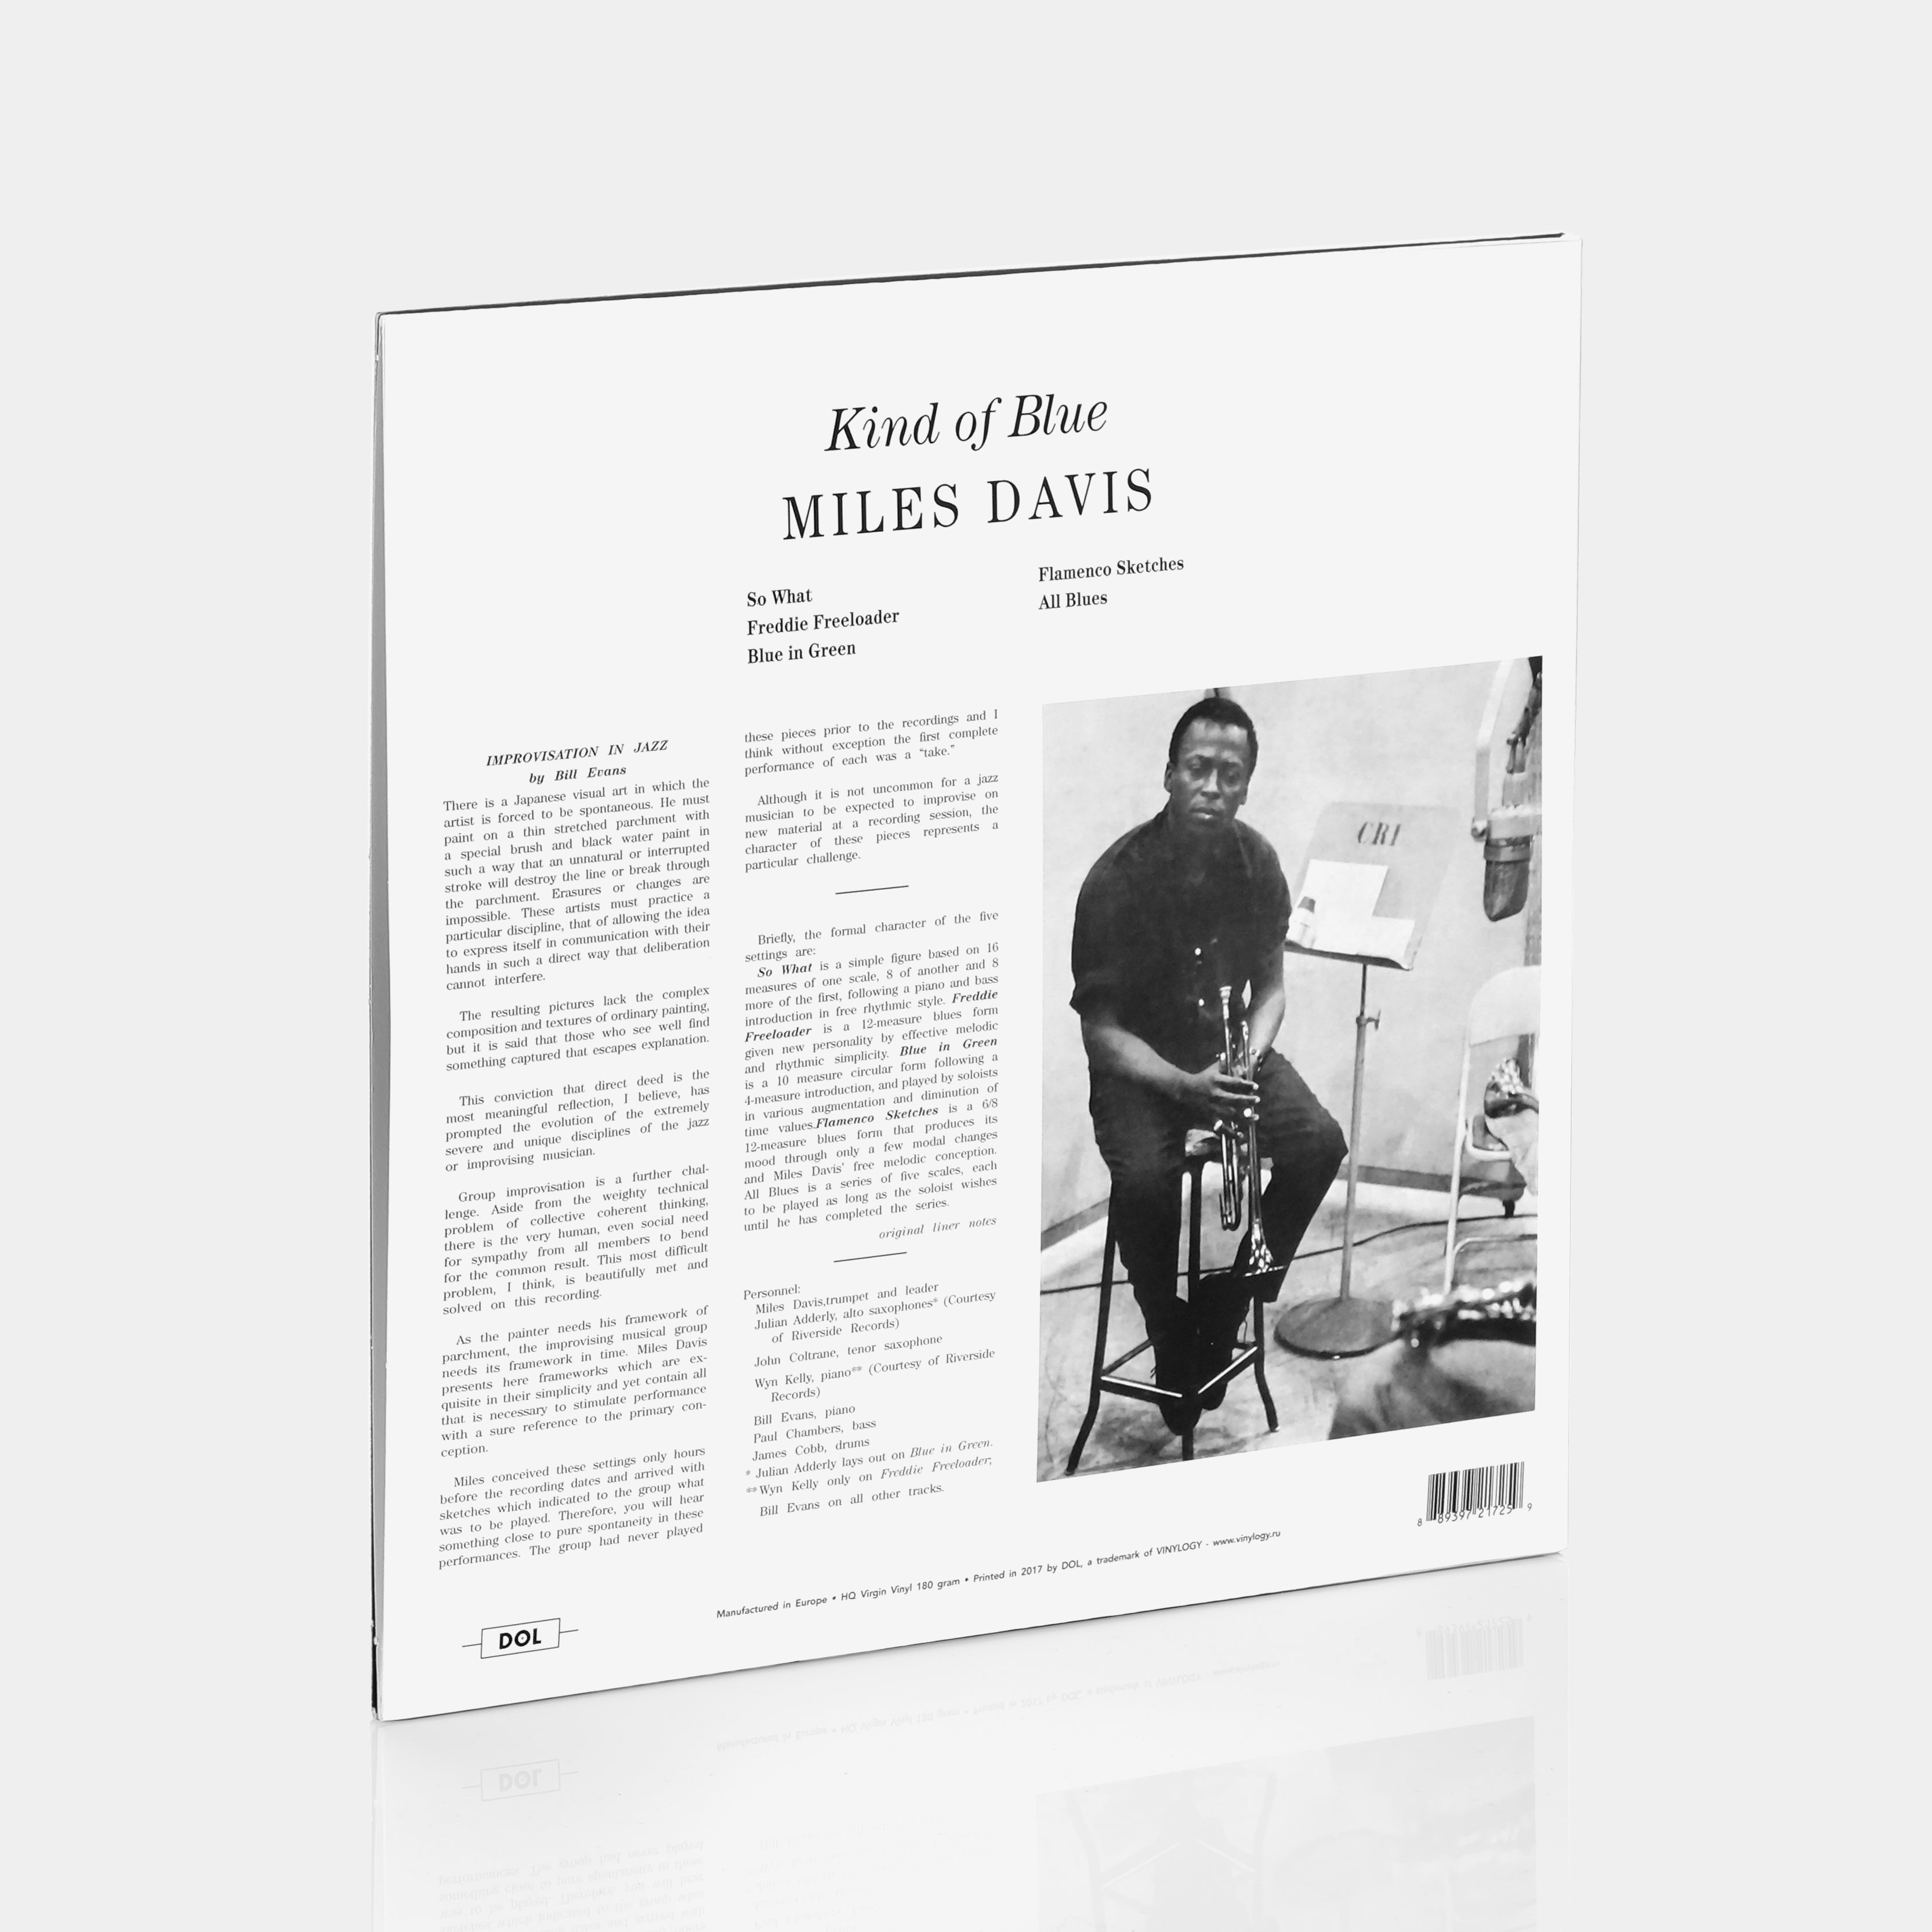 Miles Davis - Kind Of Blue (Deluxe Gatefold) LP Vinyl Record